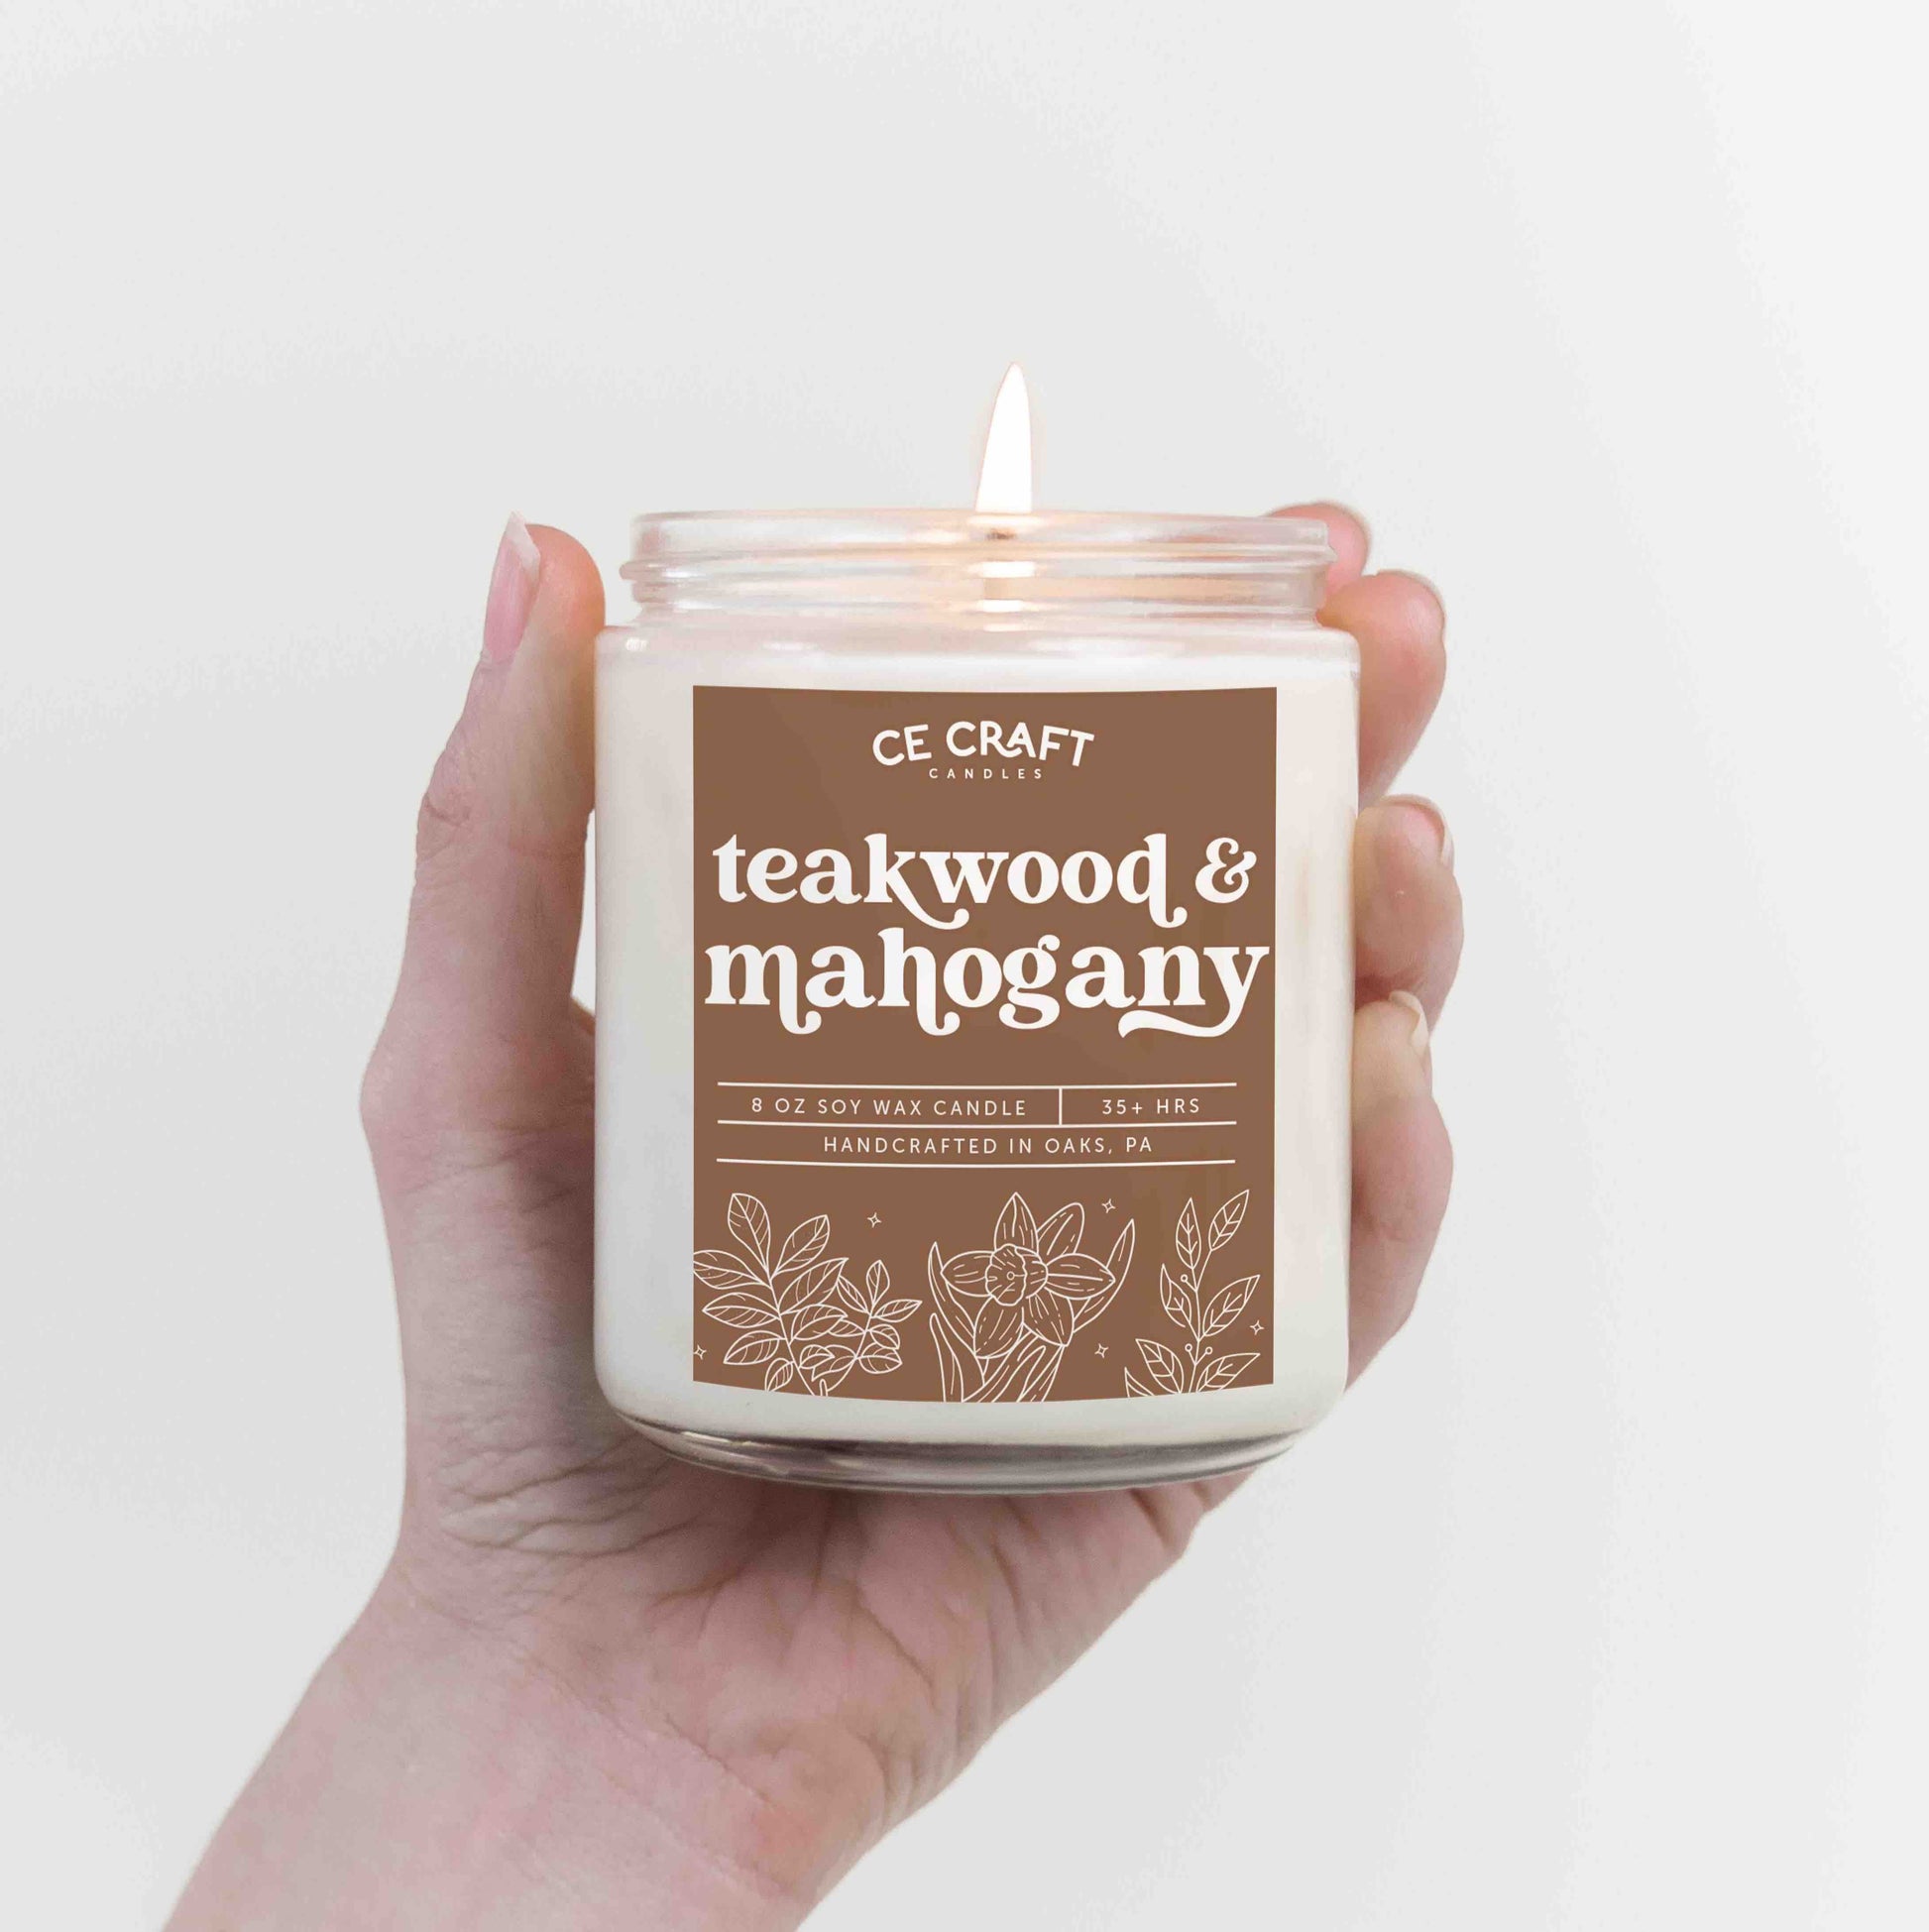 Mahogany and Teakwood Scented Candle - Large 12 oz